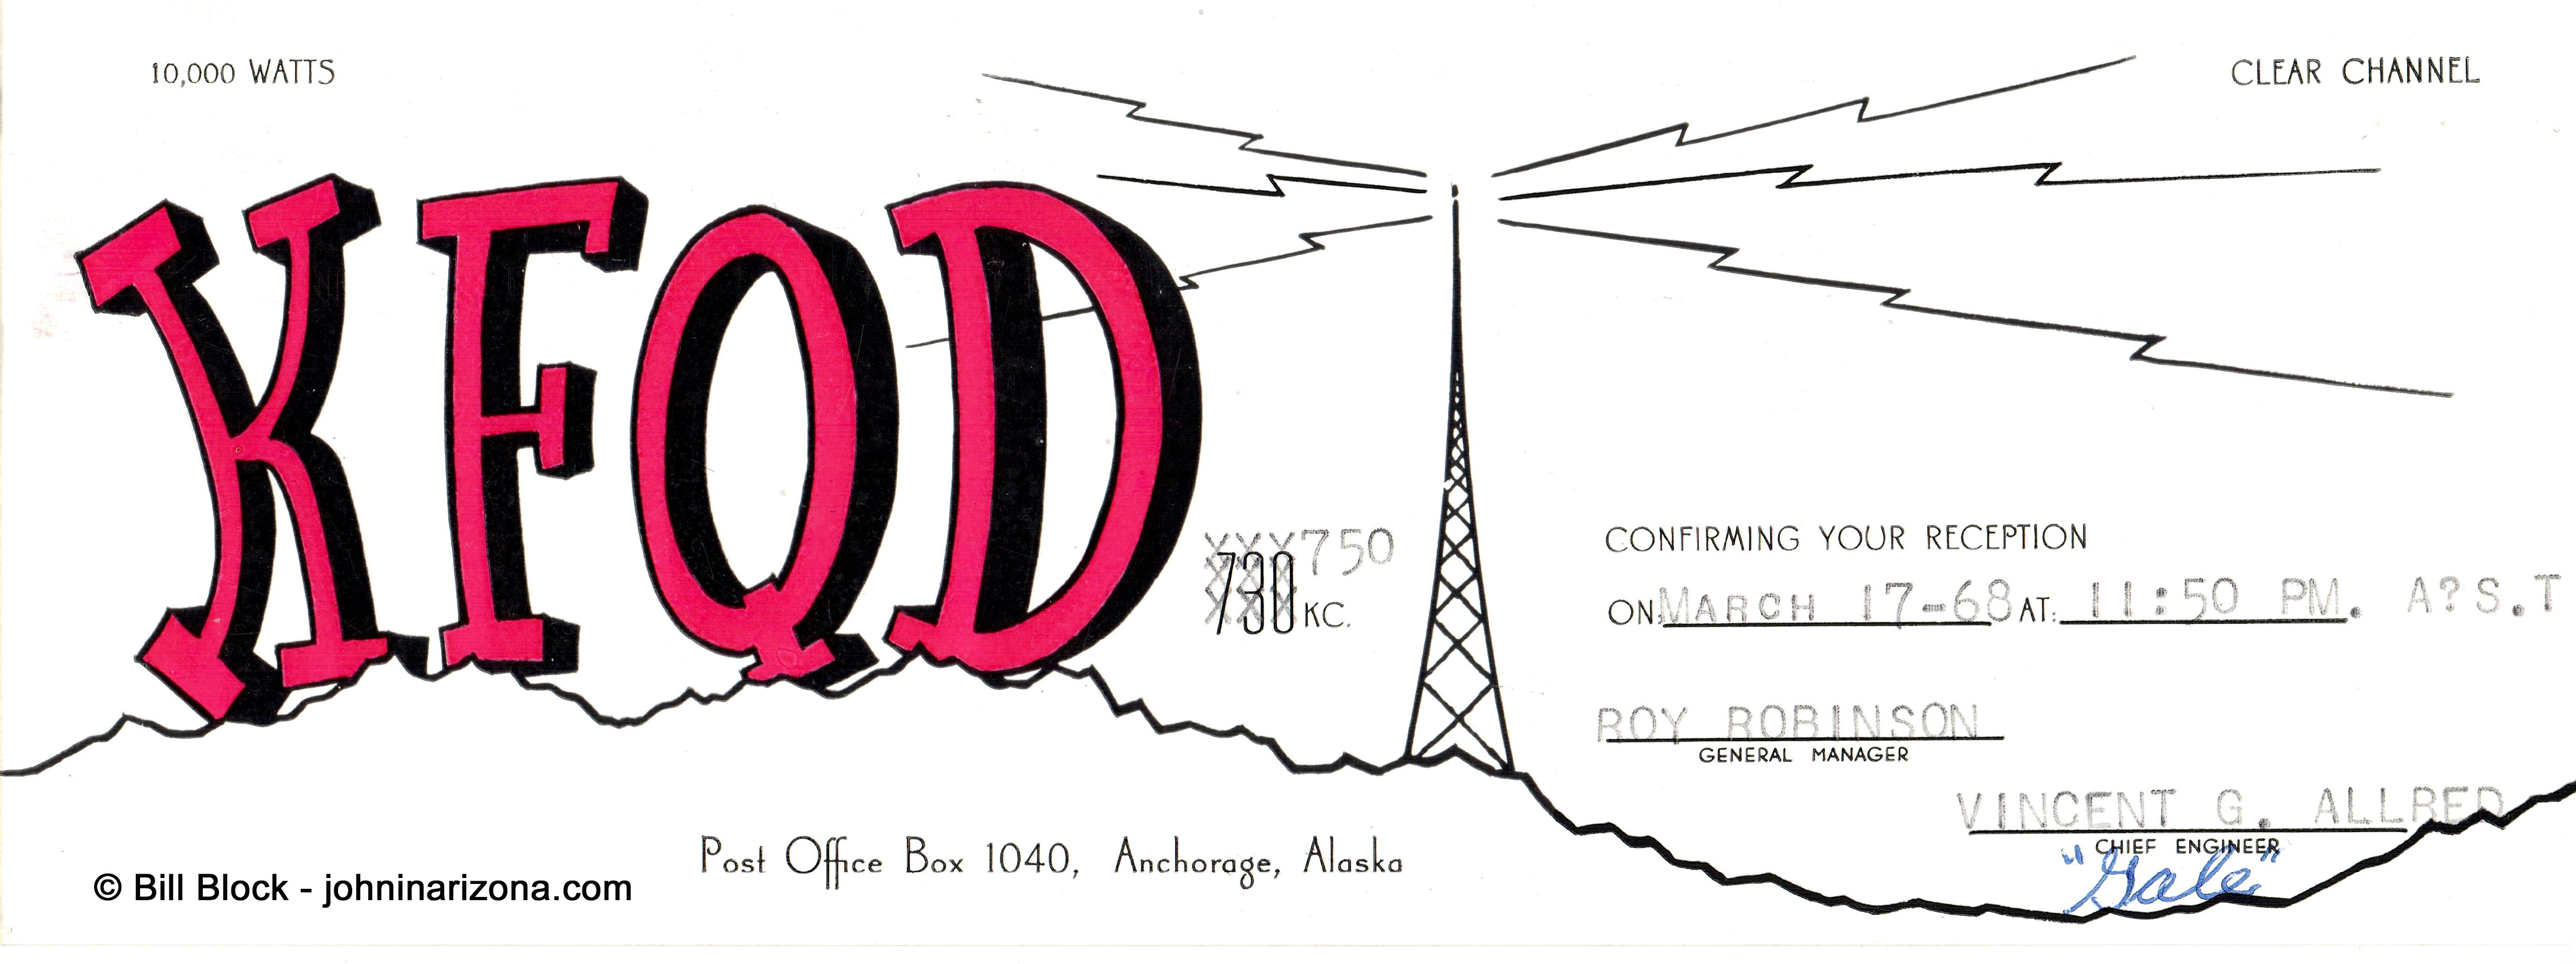 KFQD Radio 750 Anchorage, Alaska